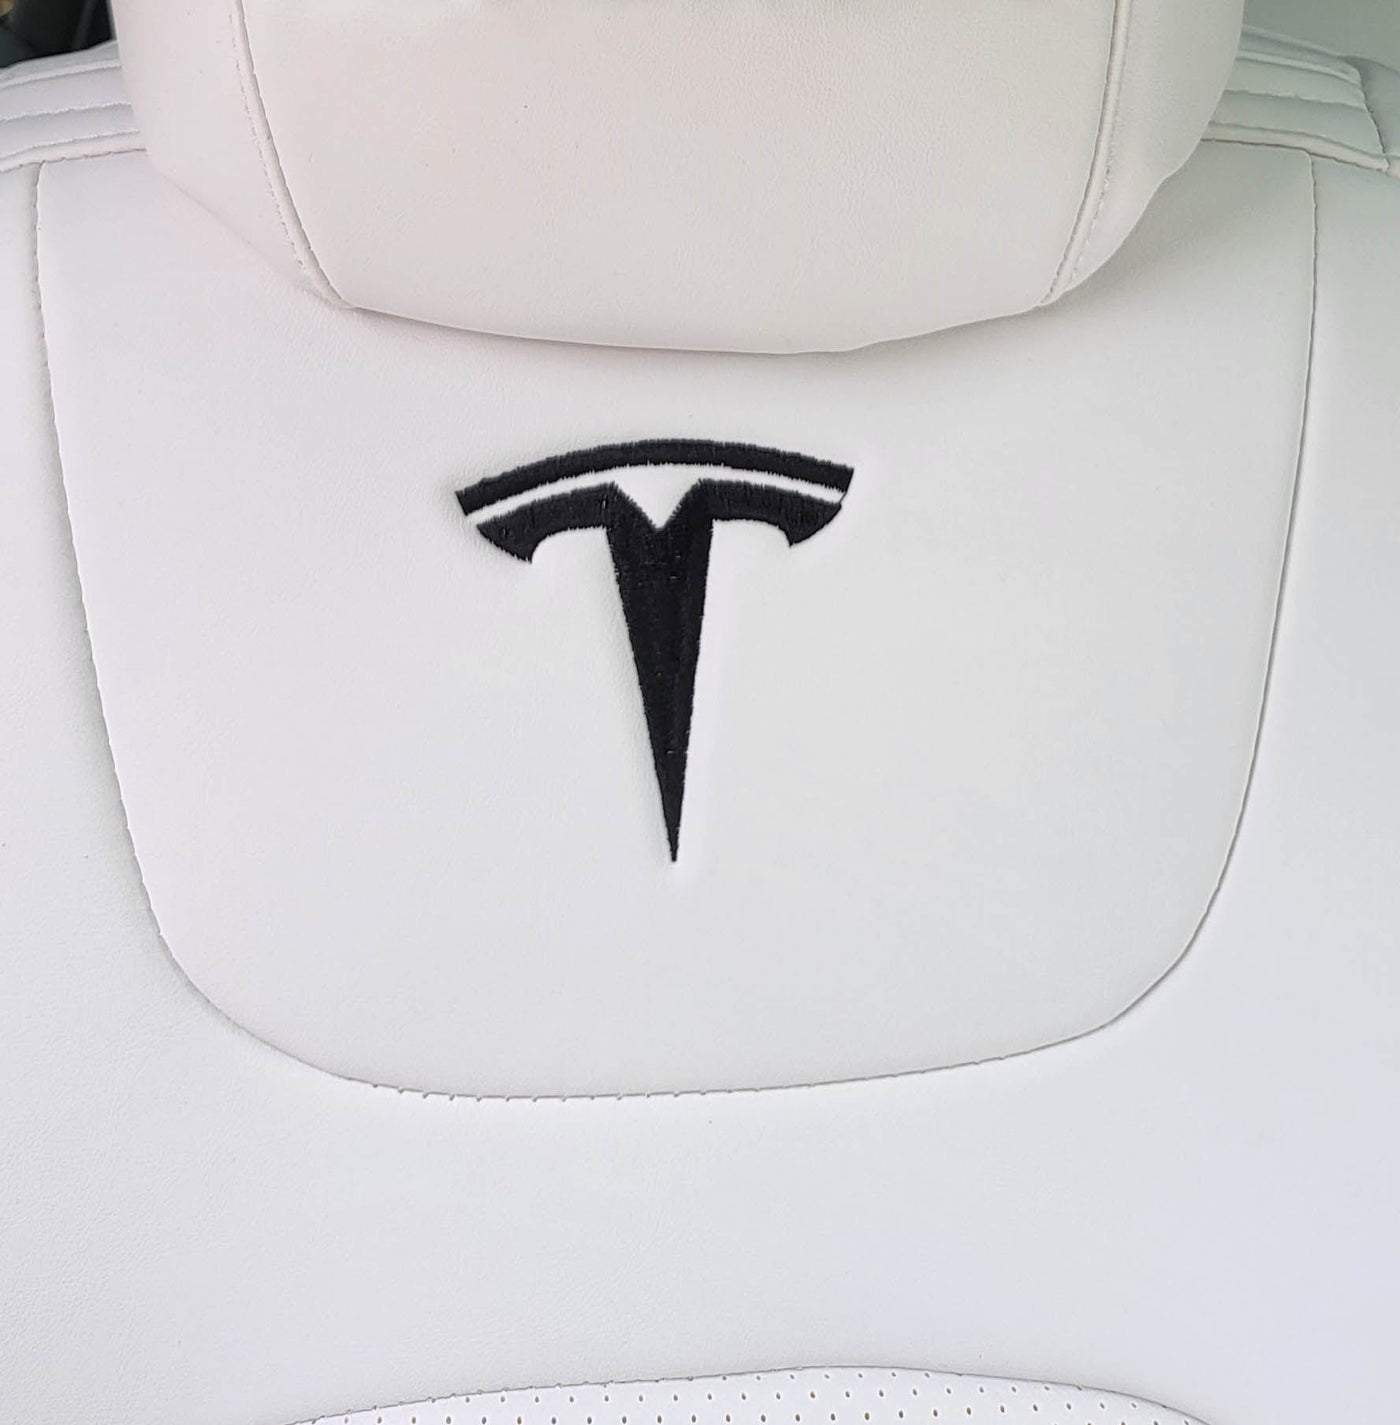 Custom Premium Vegan Leather Car Seat Covers for Tesla Model S 2012-2020 - PimpMyEV